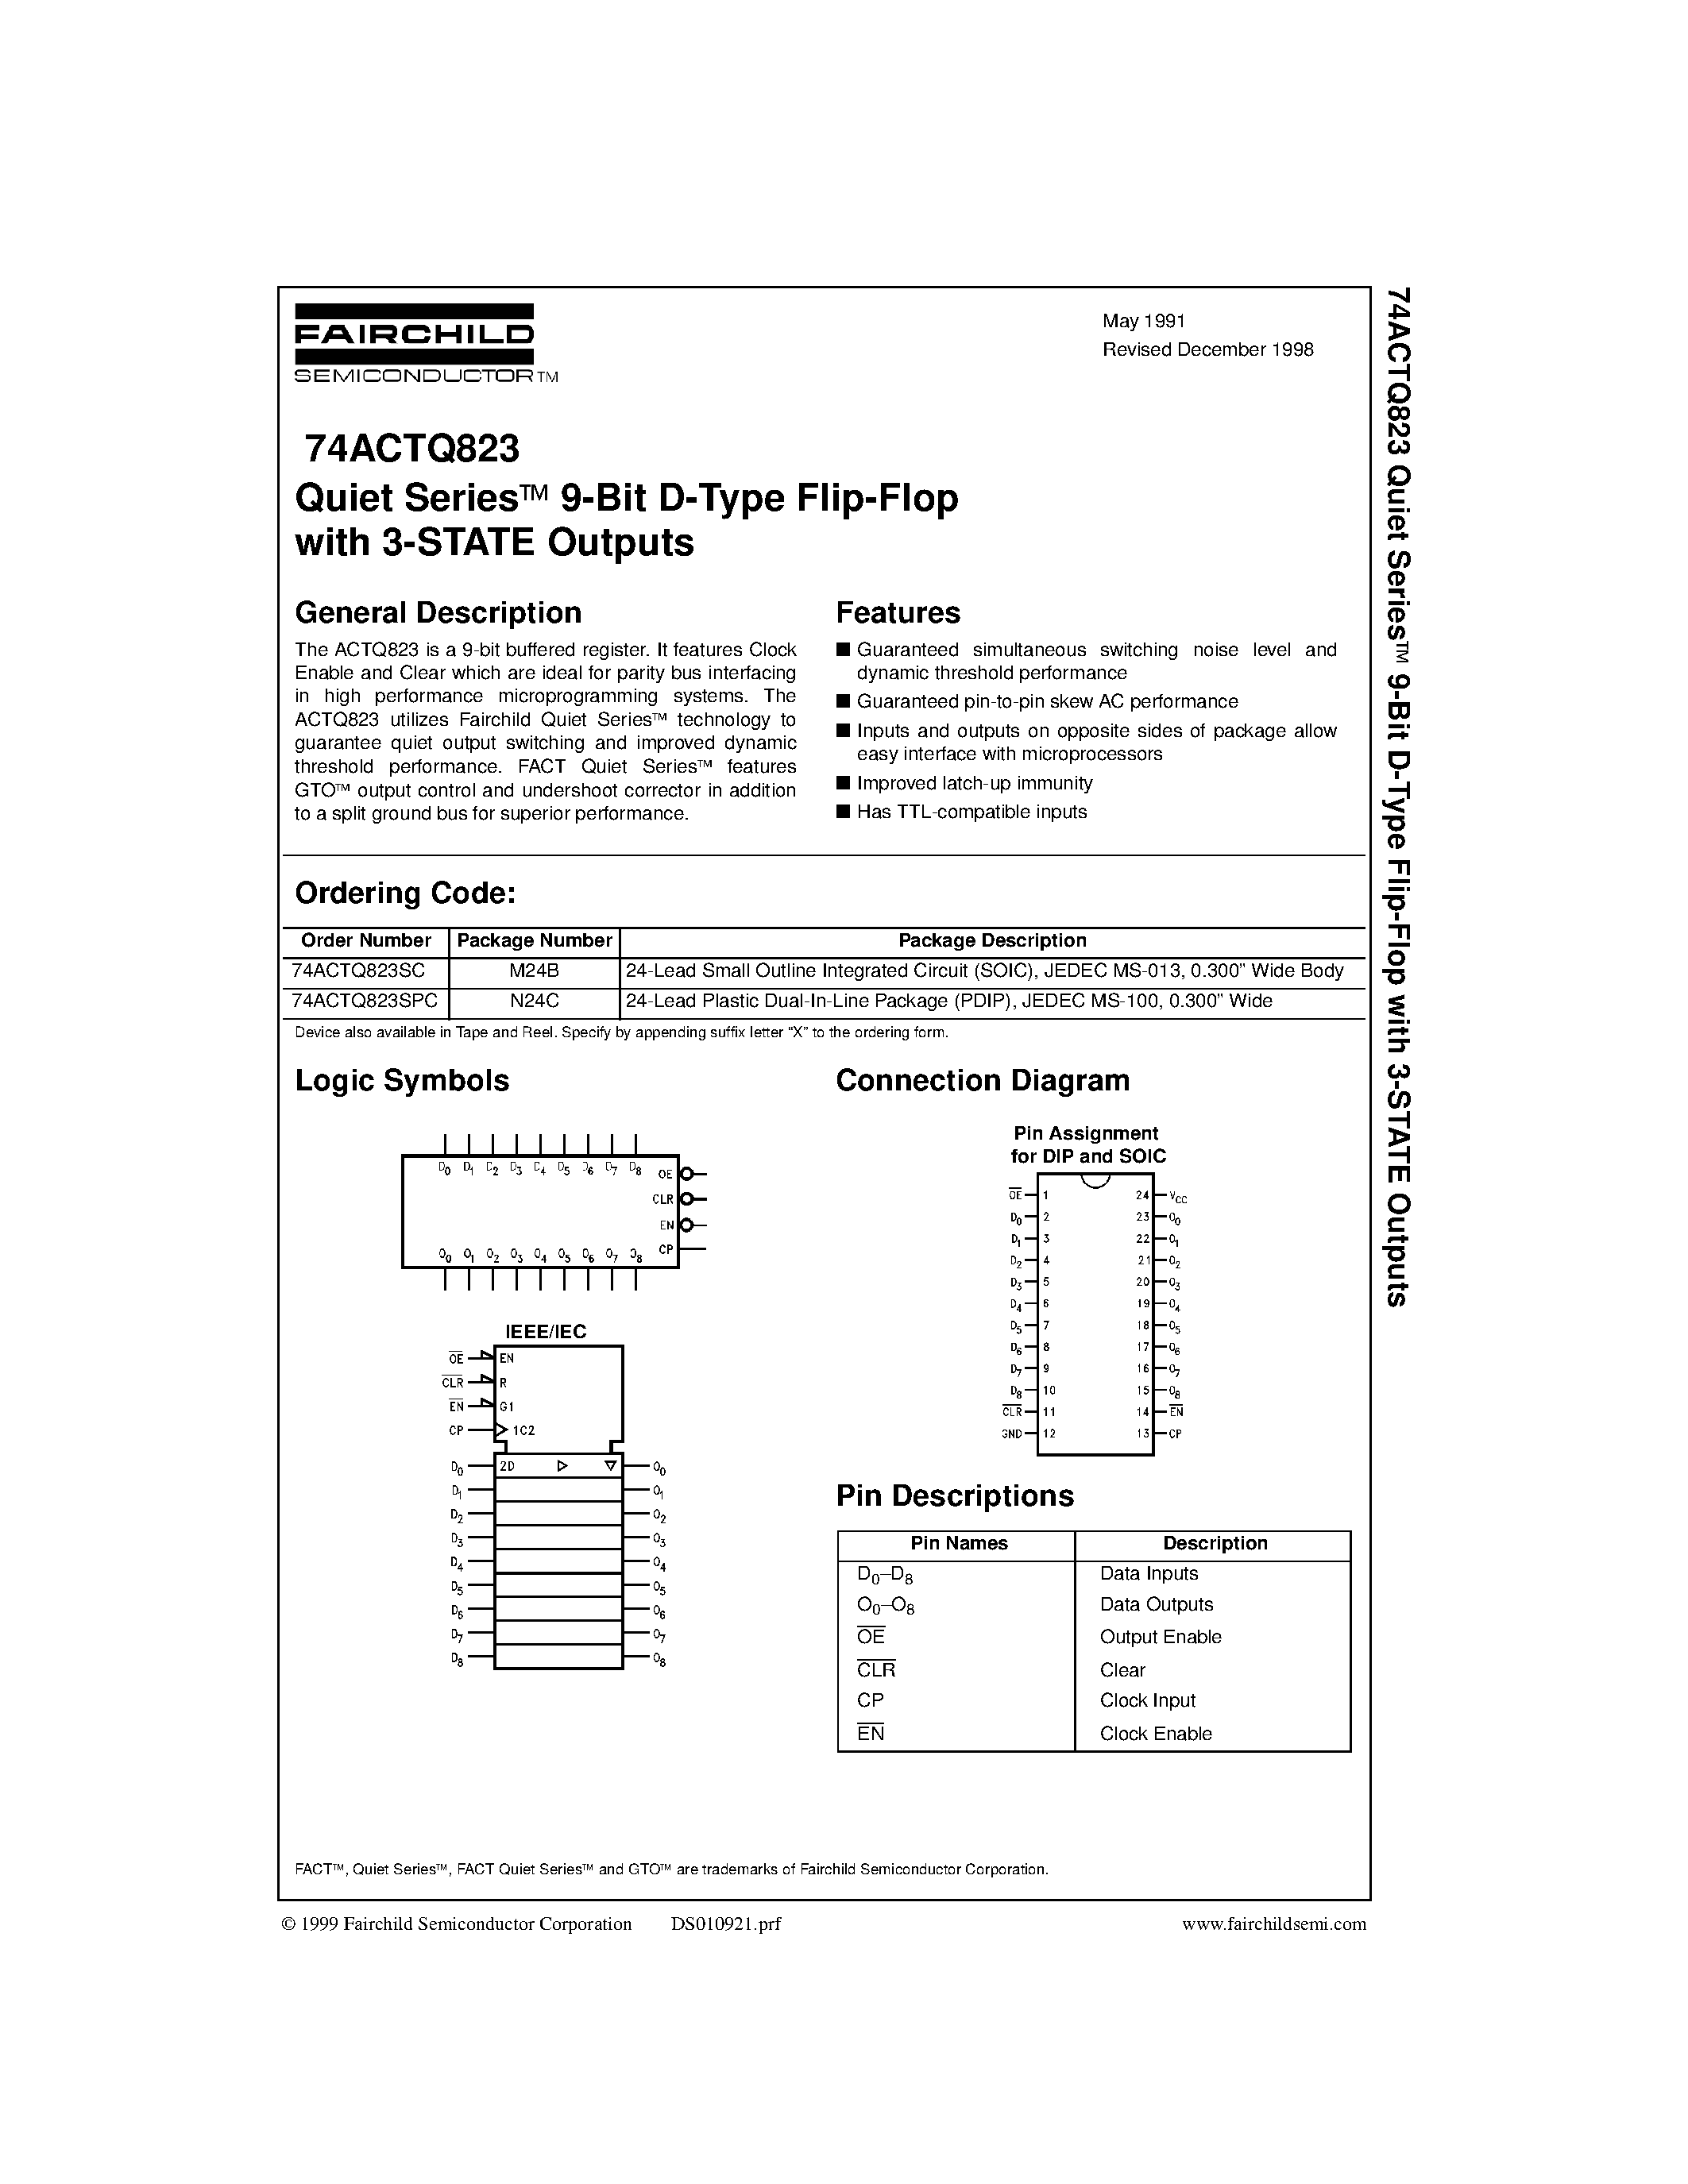 Даташит 74ACTQ823SPC - Quiet Seriesa 9-Bit D-Type Flip-Flop with 3-STATE Outputs страница 1